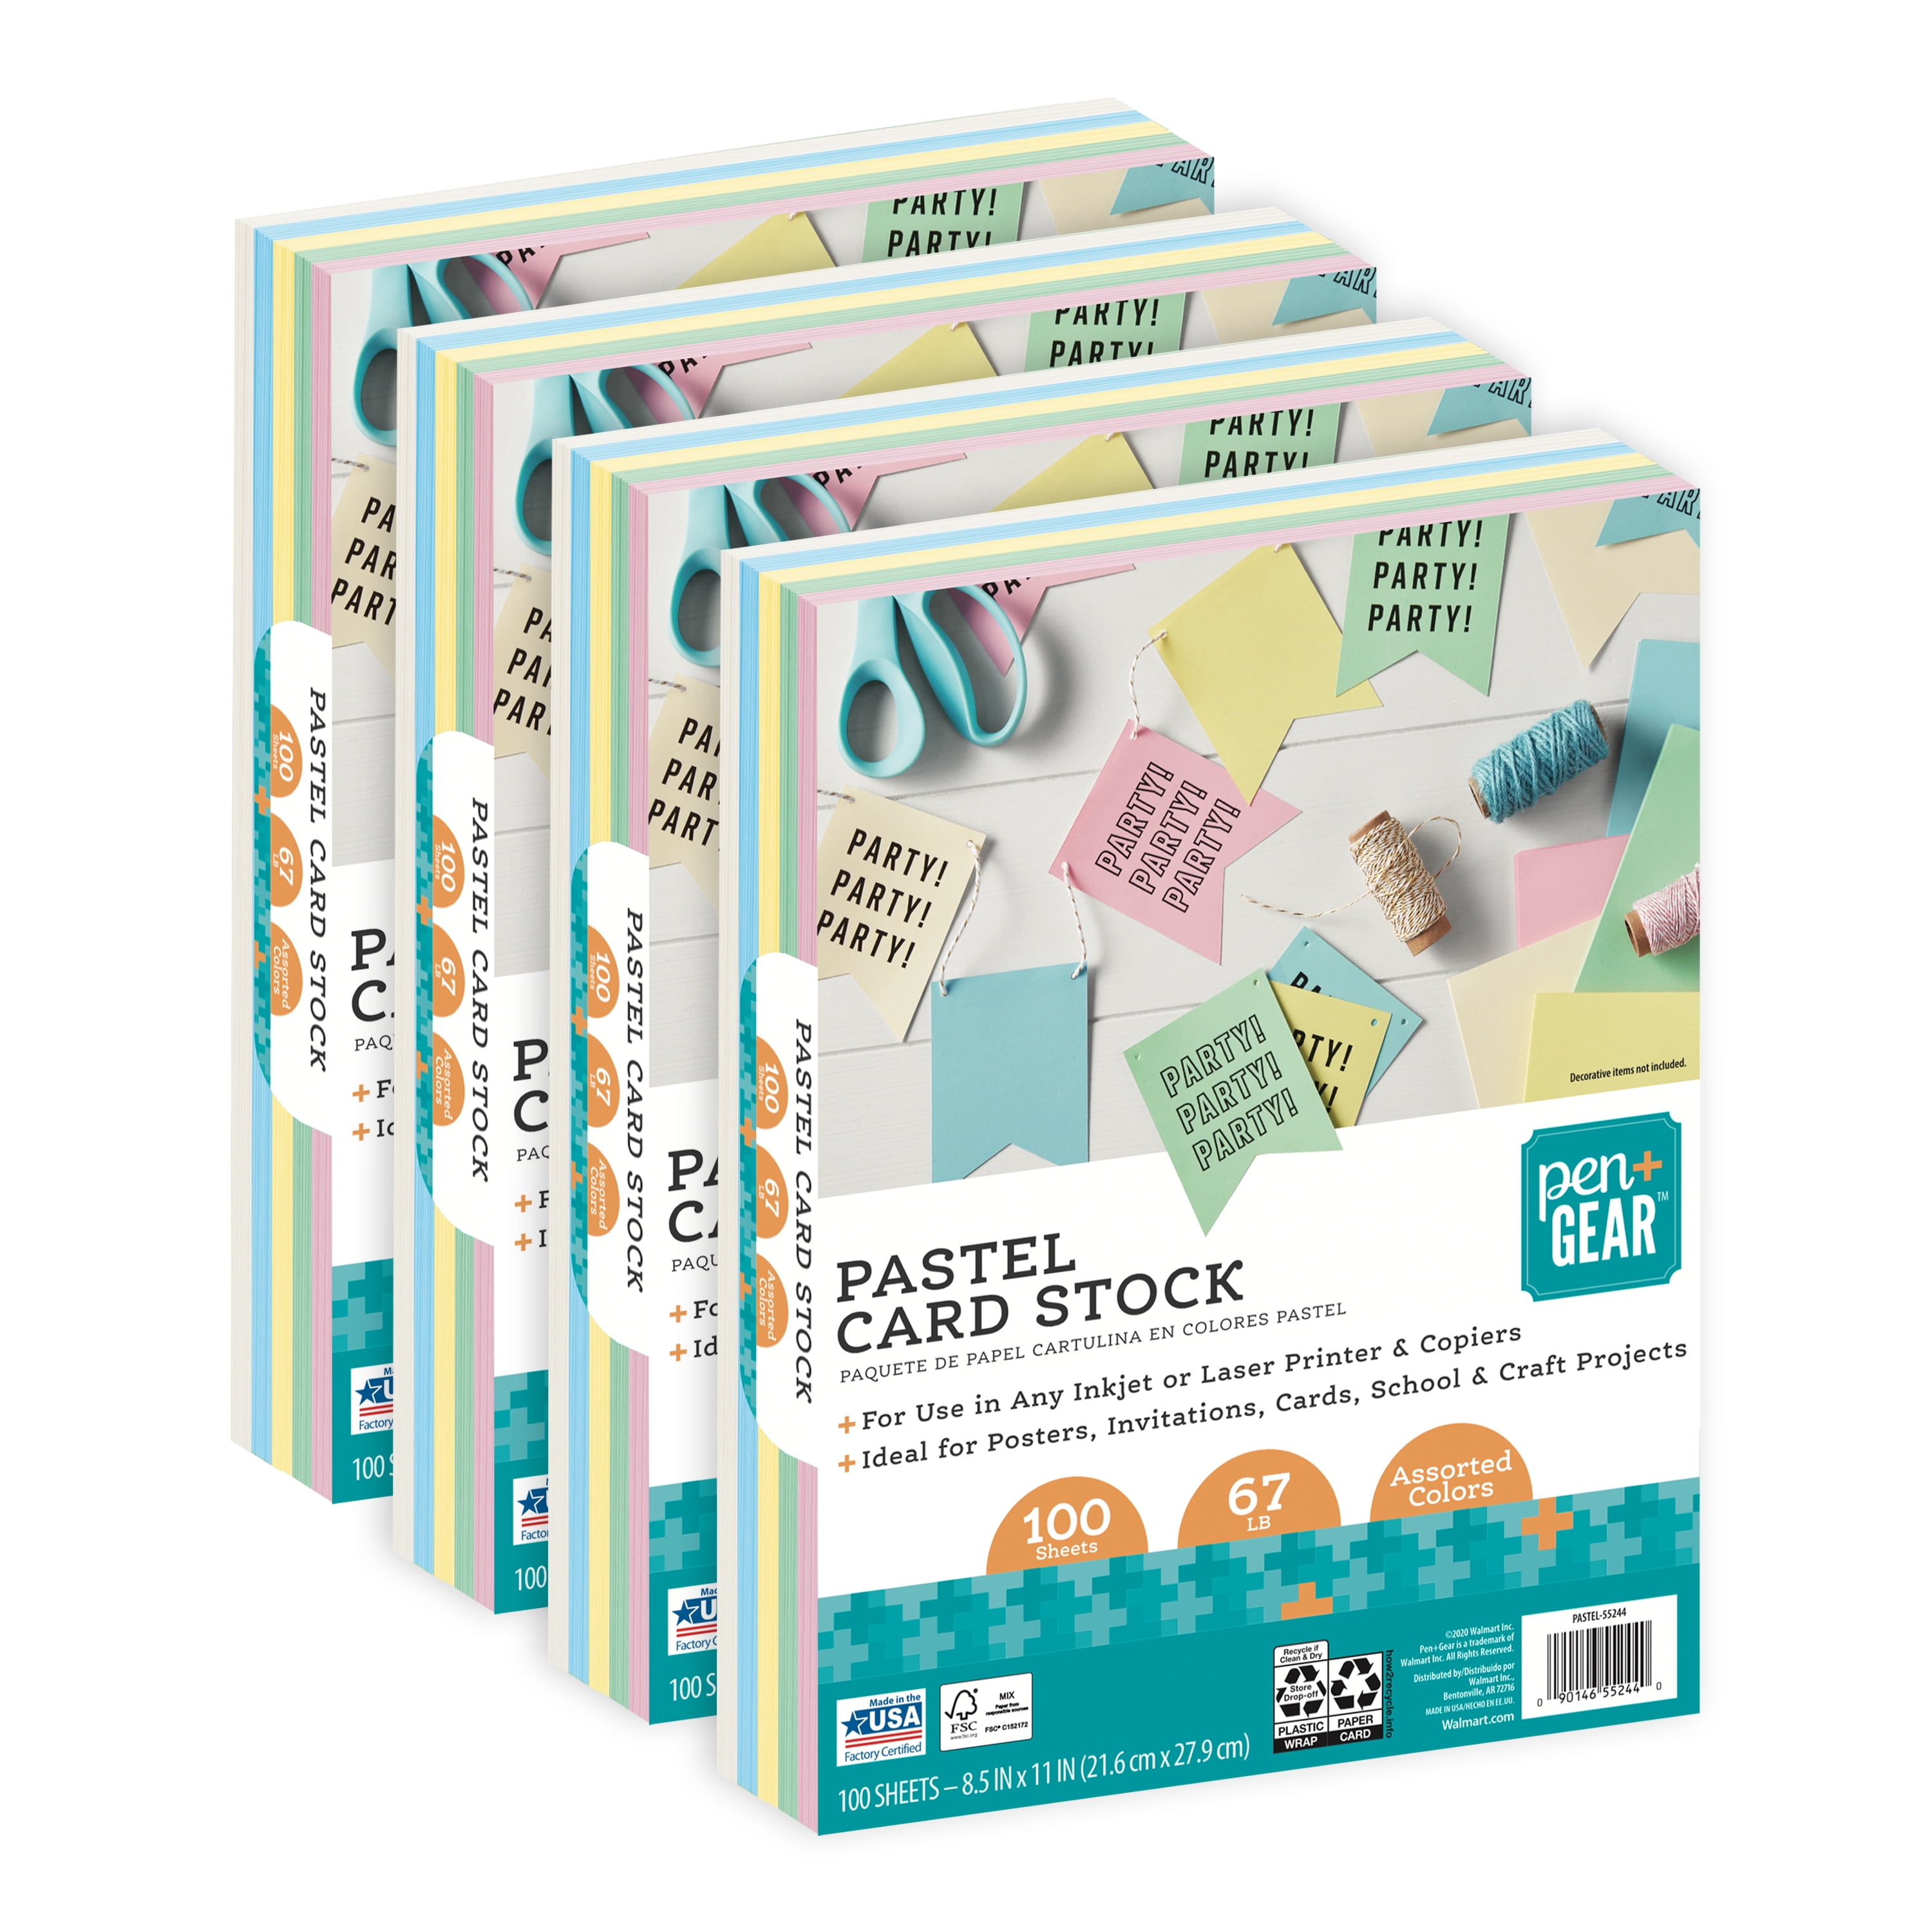 Cardstock Pad 5x7 48pc Pastel Assortment